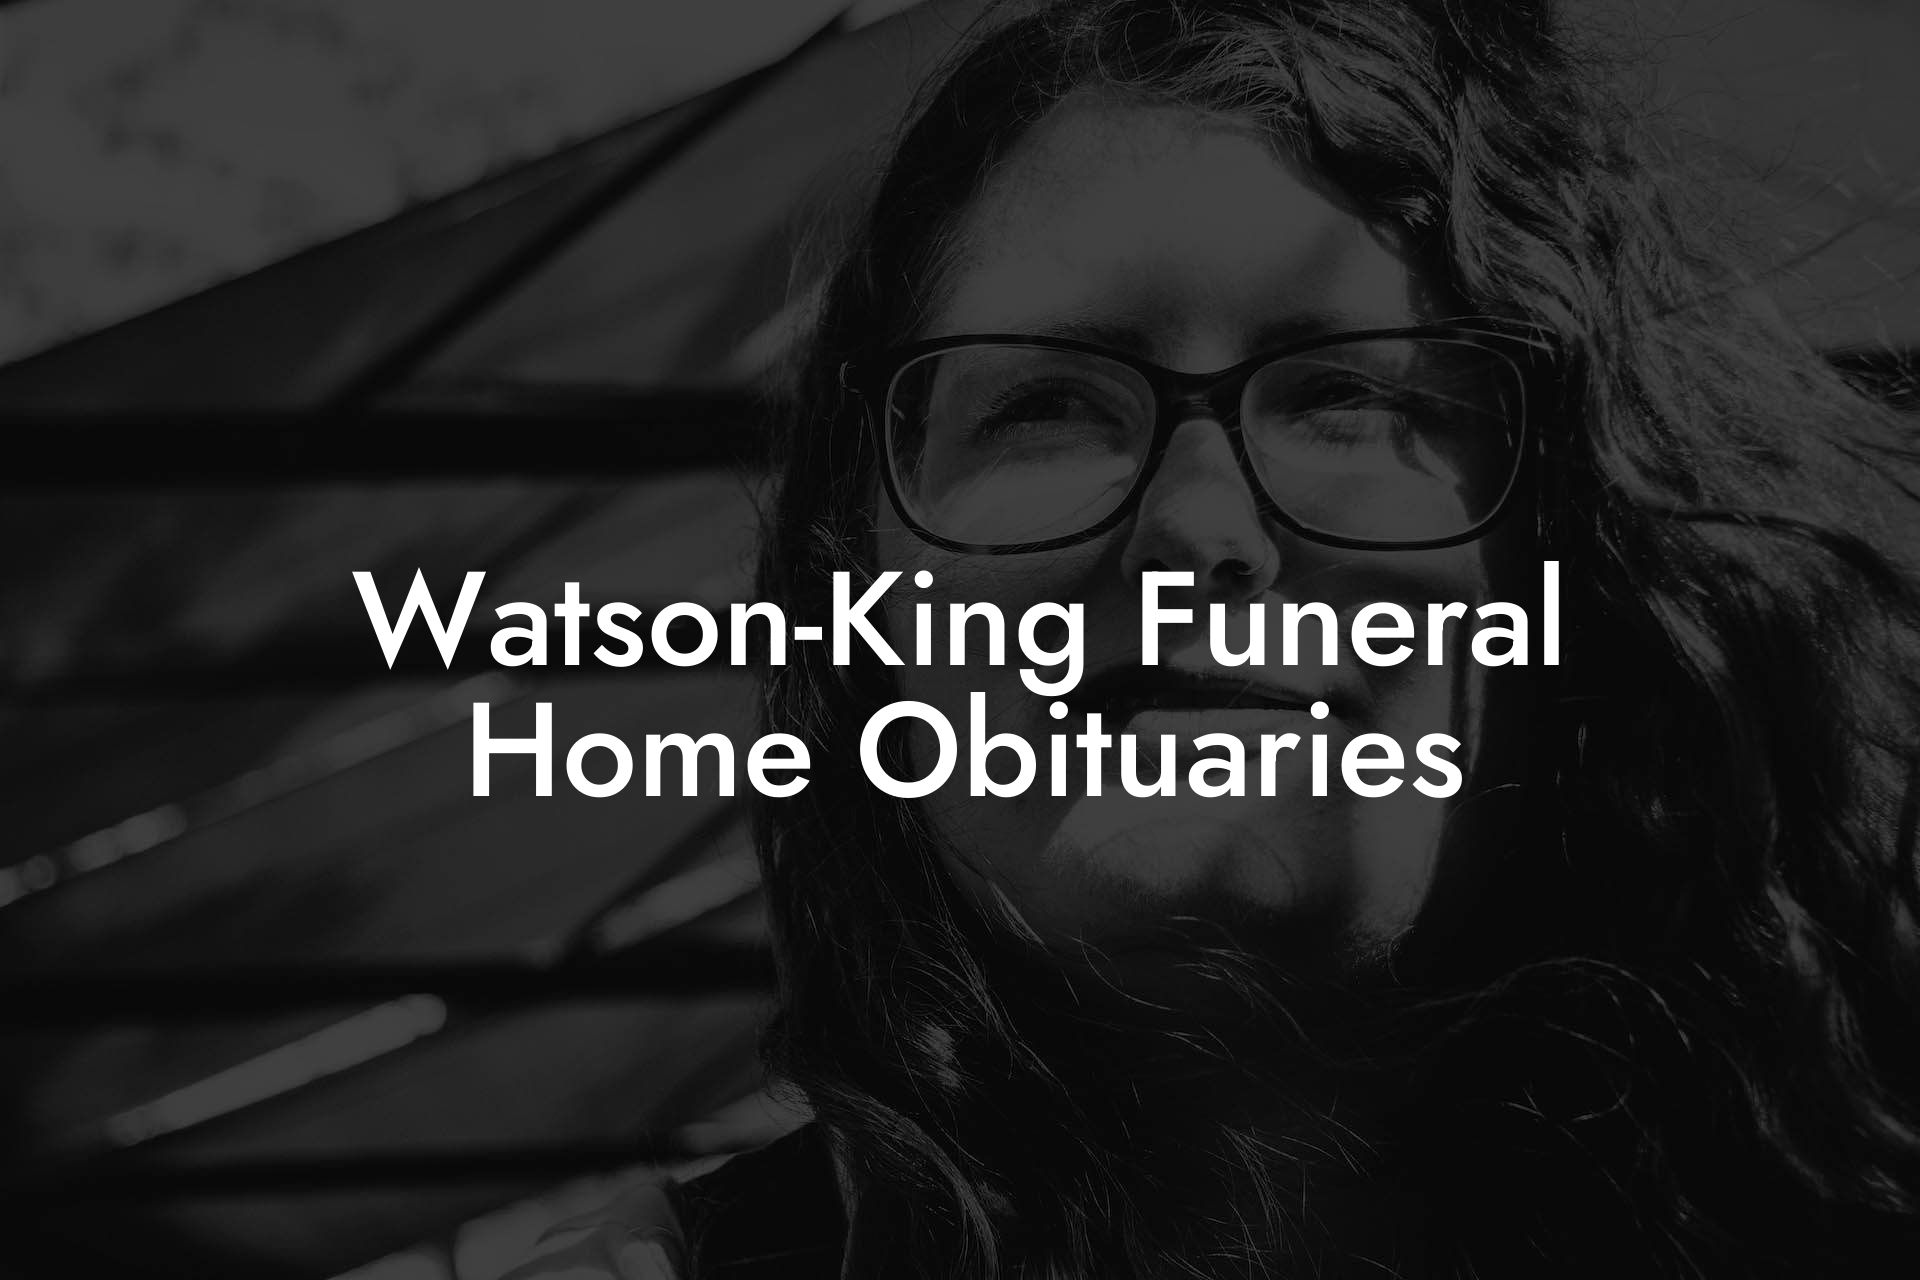 Watson-King Funeral Home Obituaries